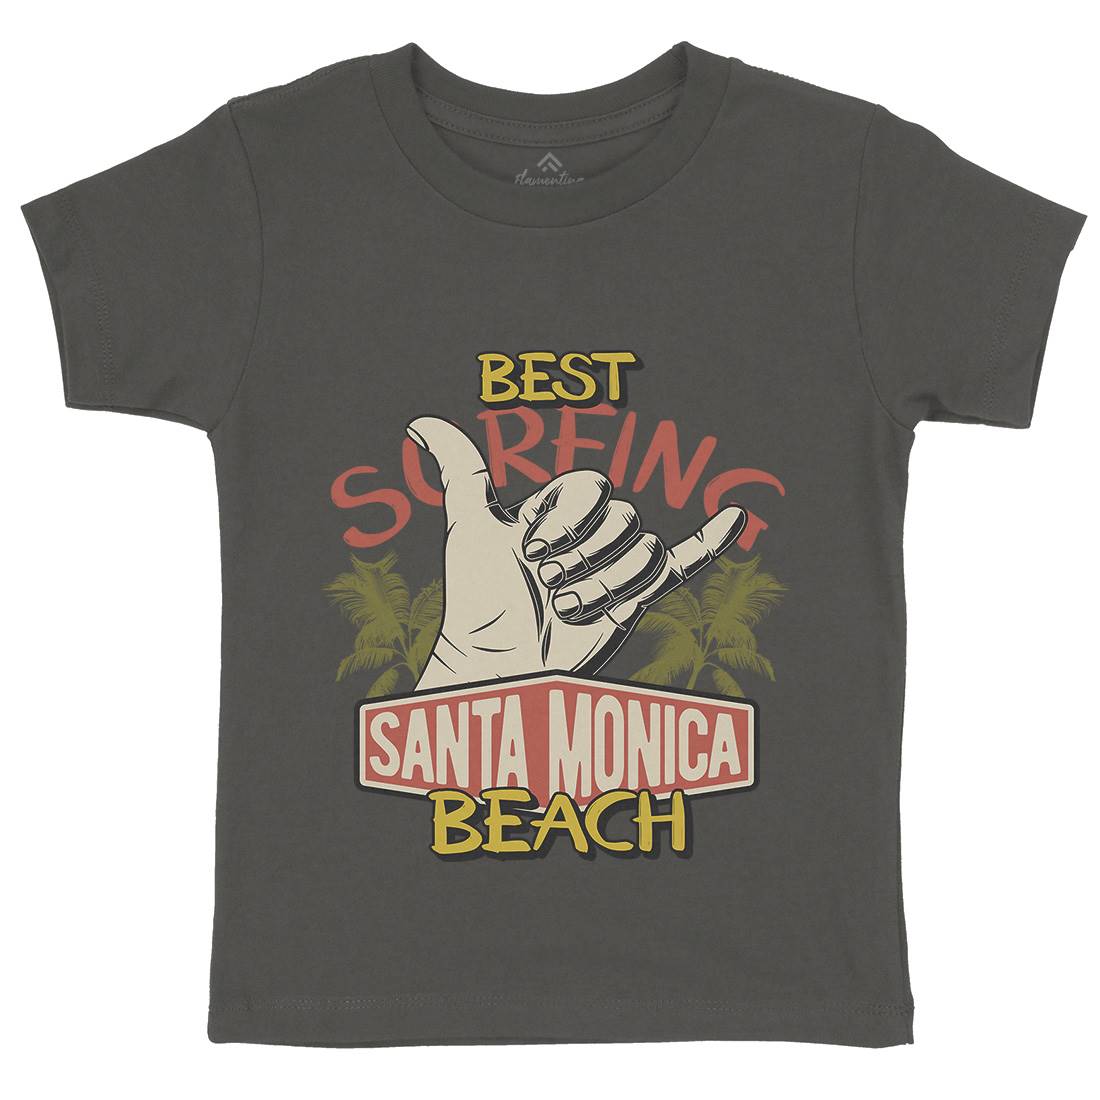 Best Surfing Beach Kids Crew Neck T-Shirt Surf D909